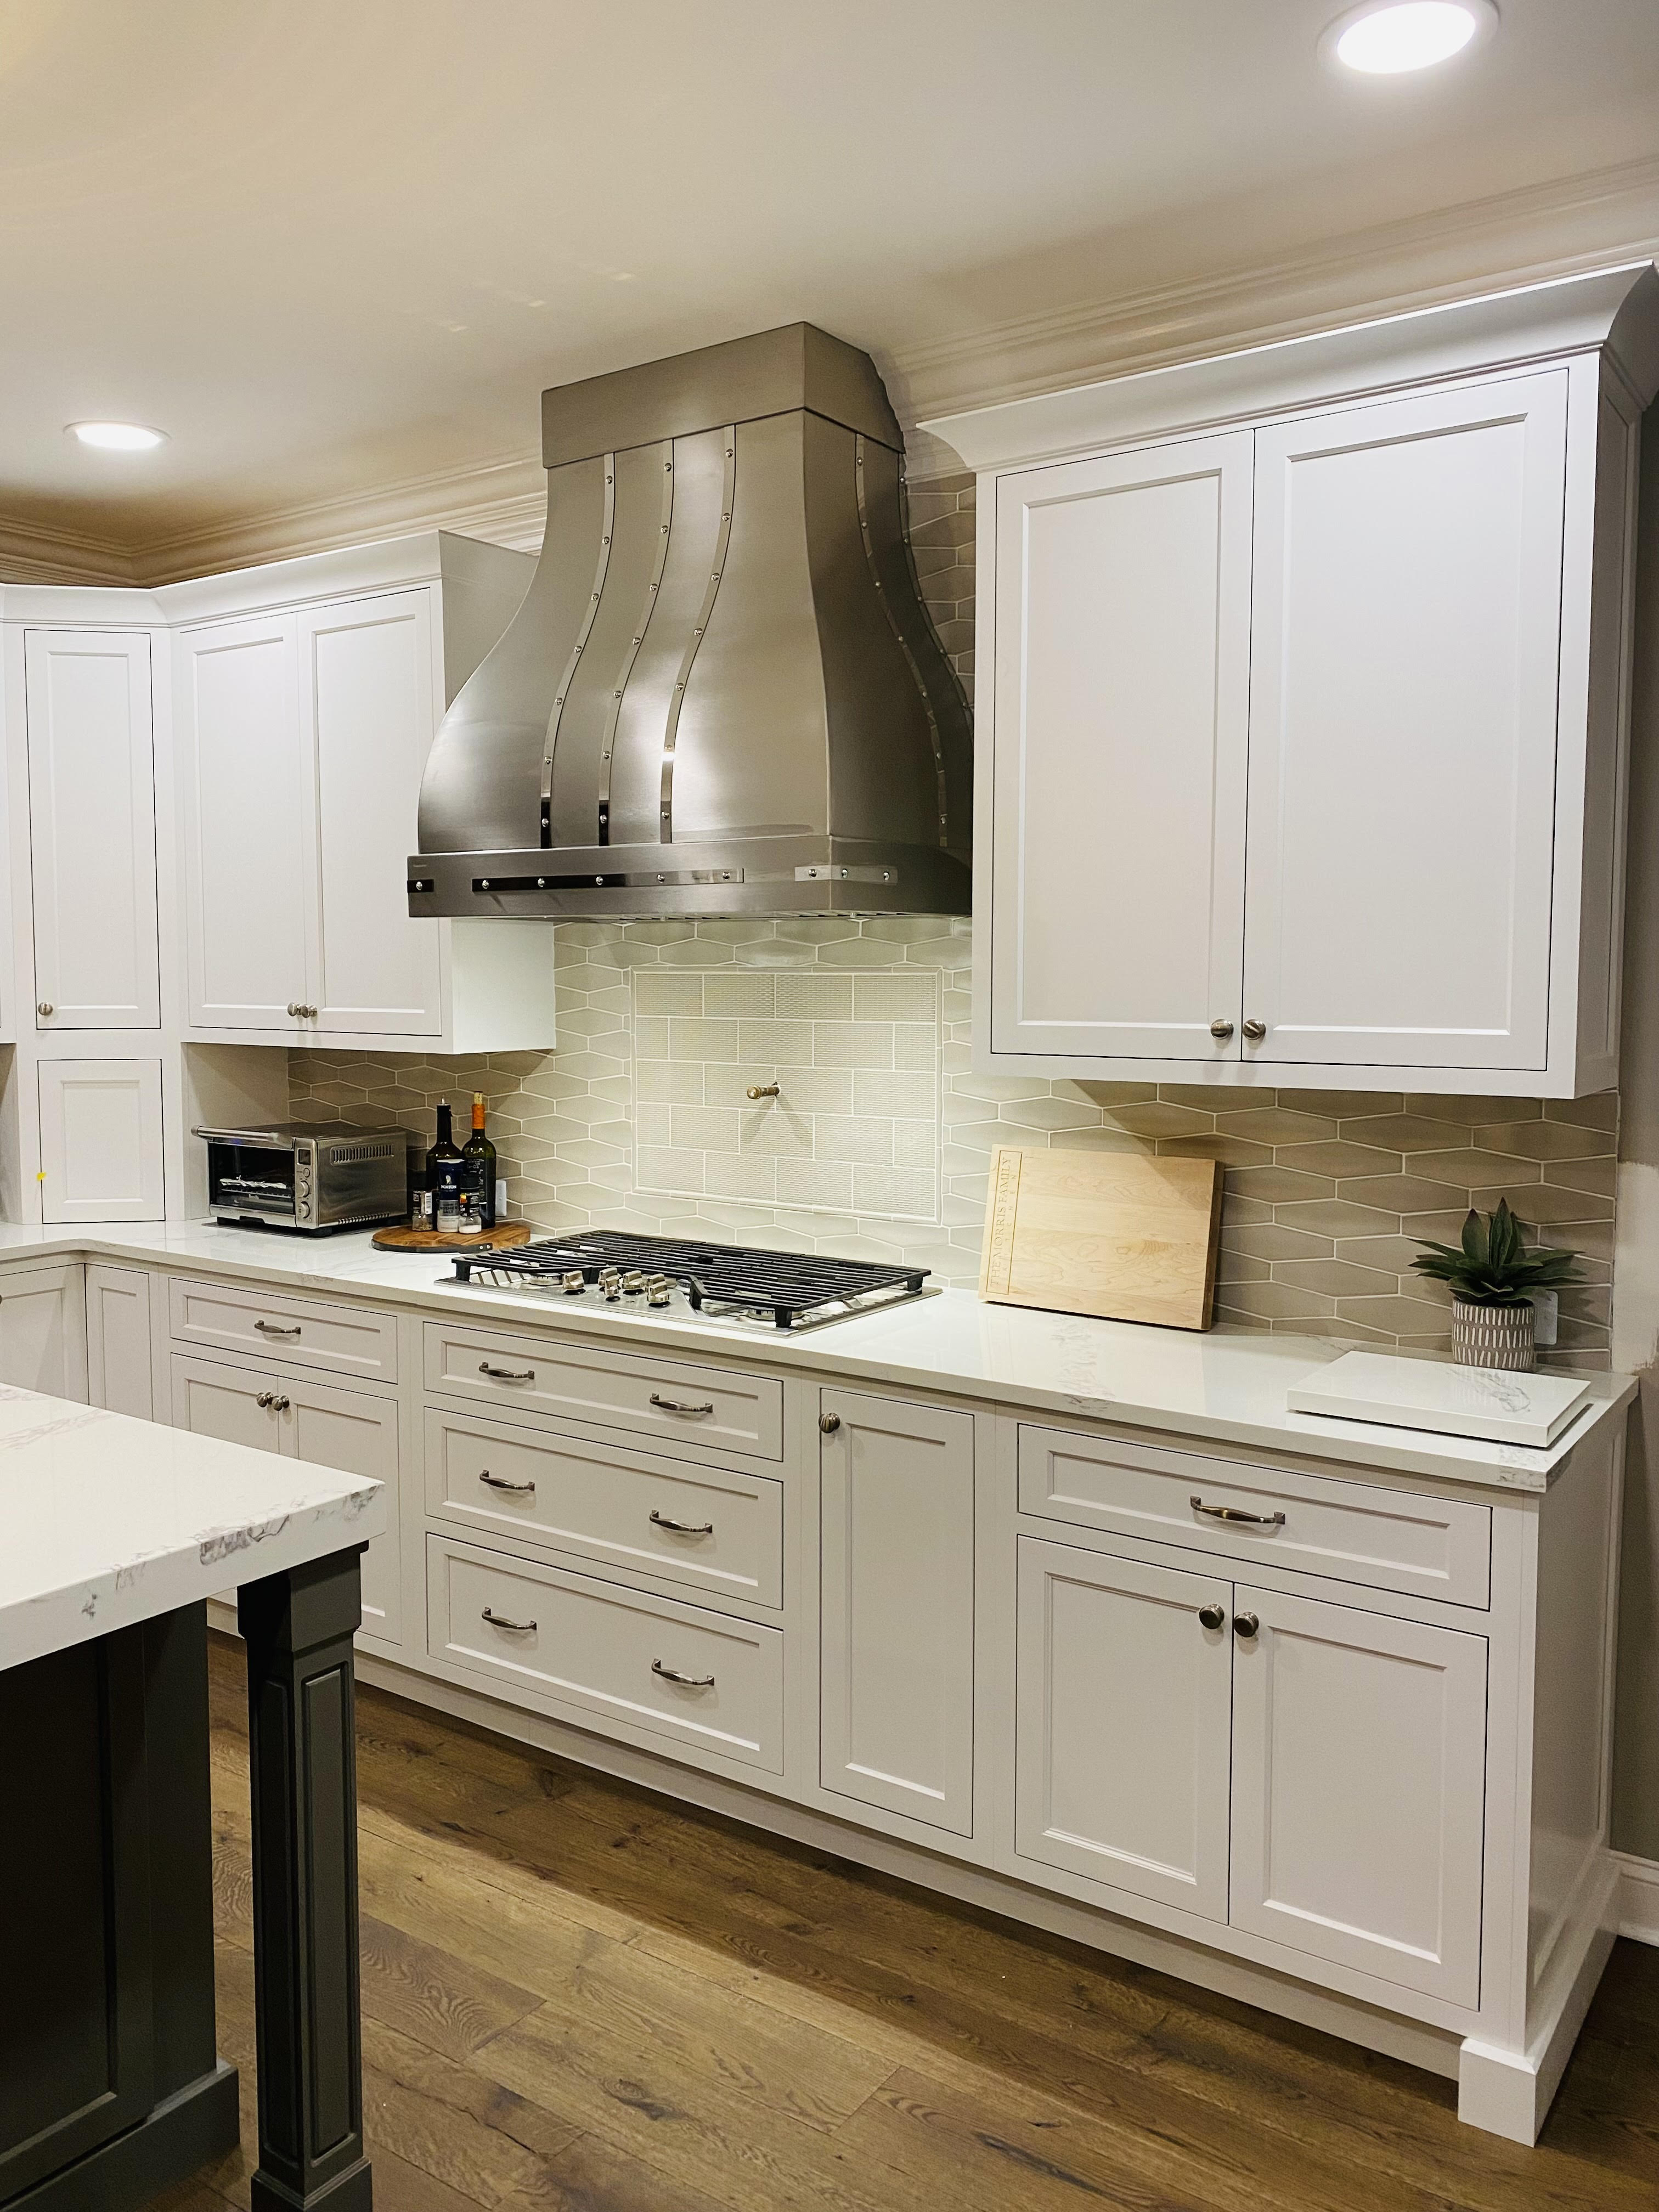 Explore elegant kitchen design idea range hood options white kitchen cabinets, white kitchen countertops marble backsplash